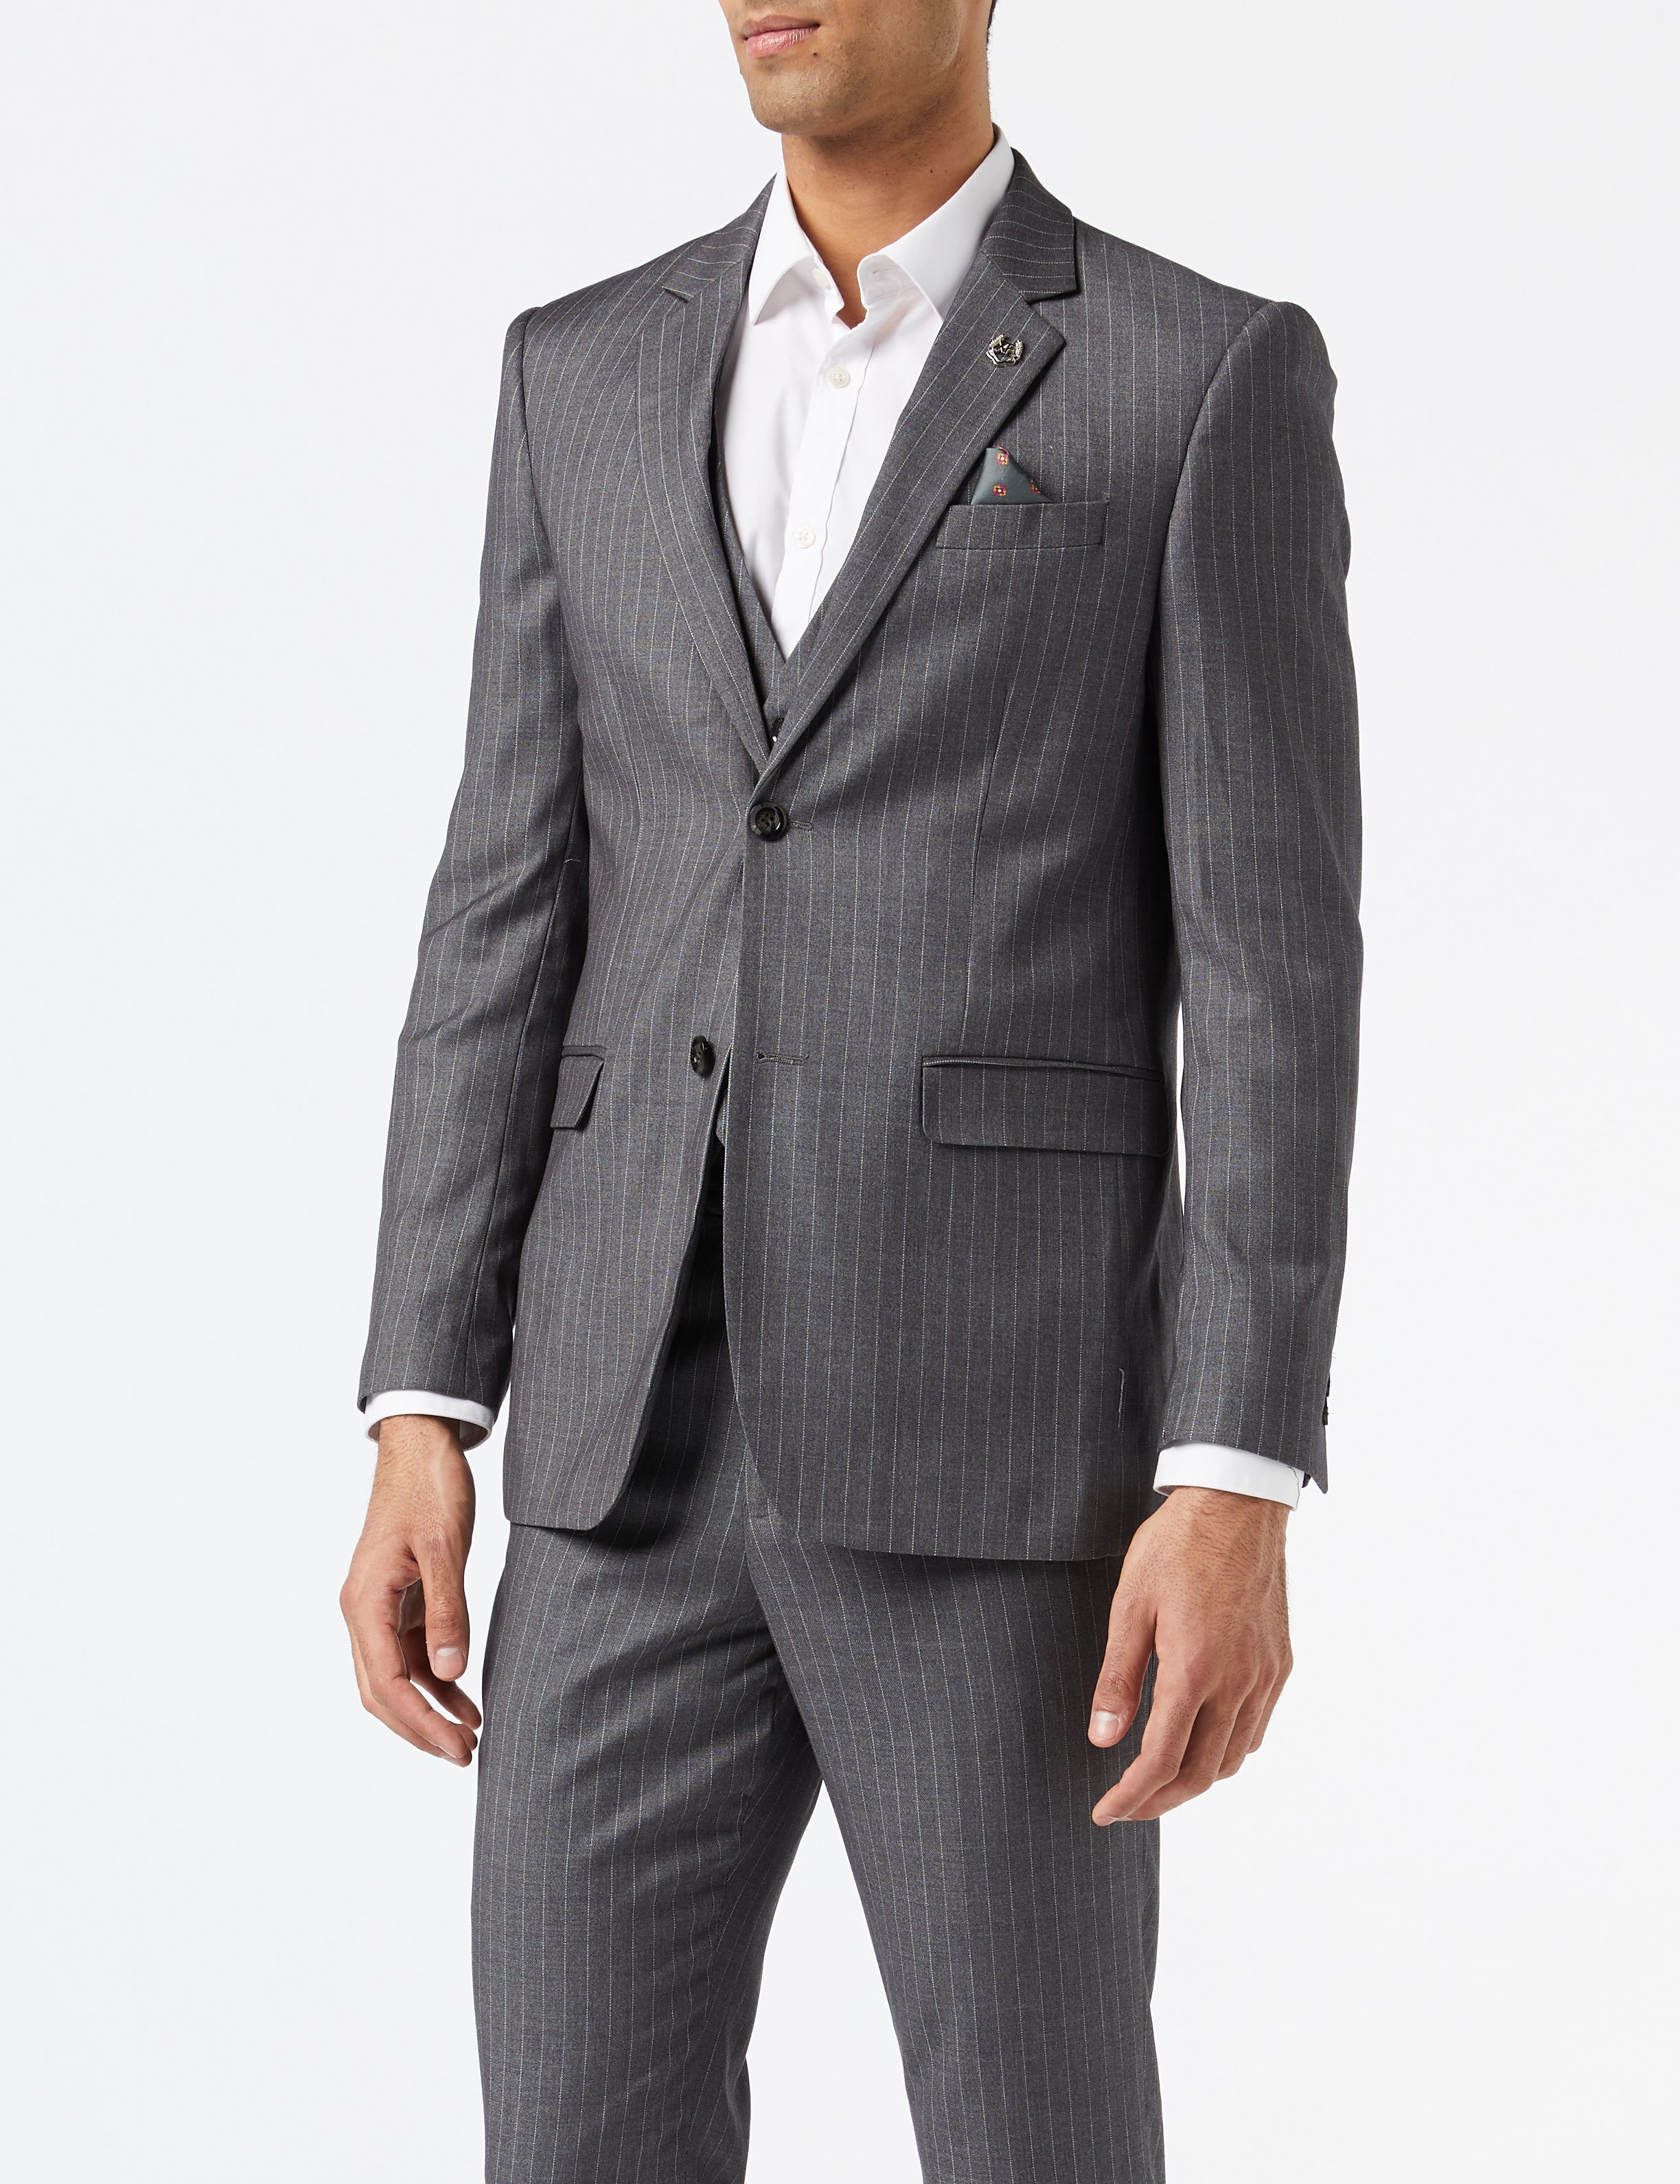 4 Piece Pin Stripe Grey Suit